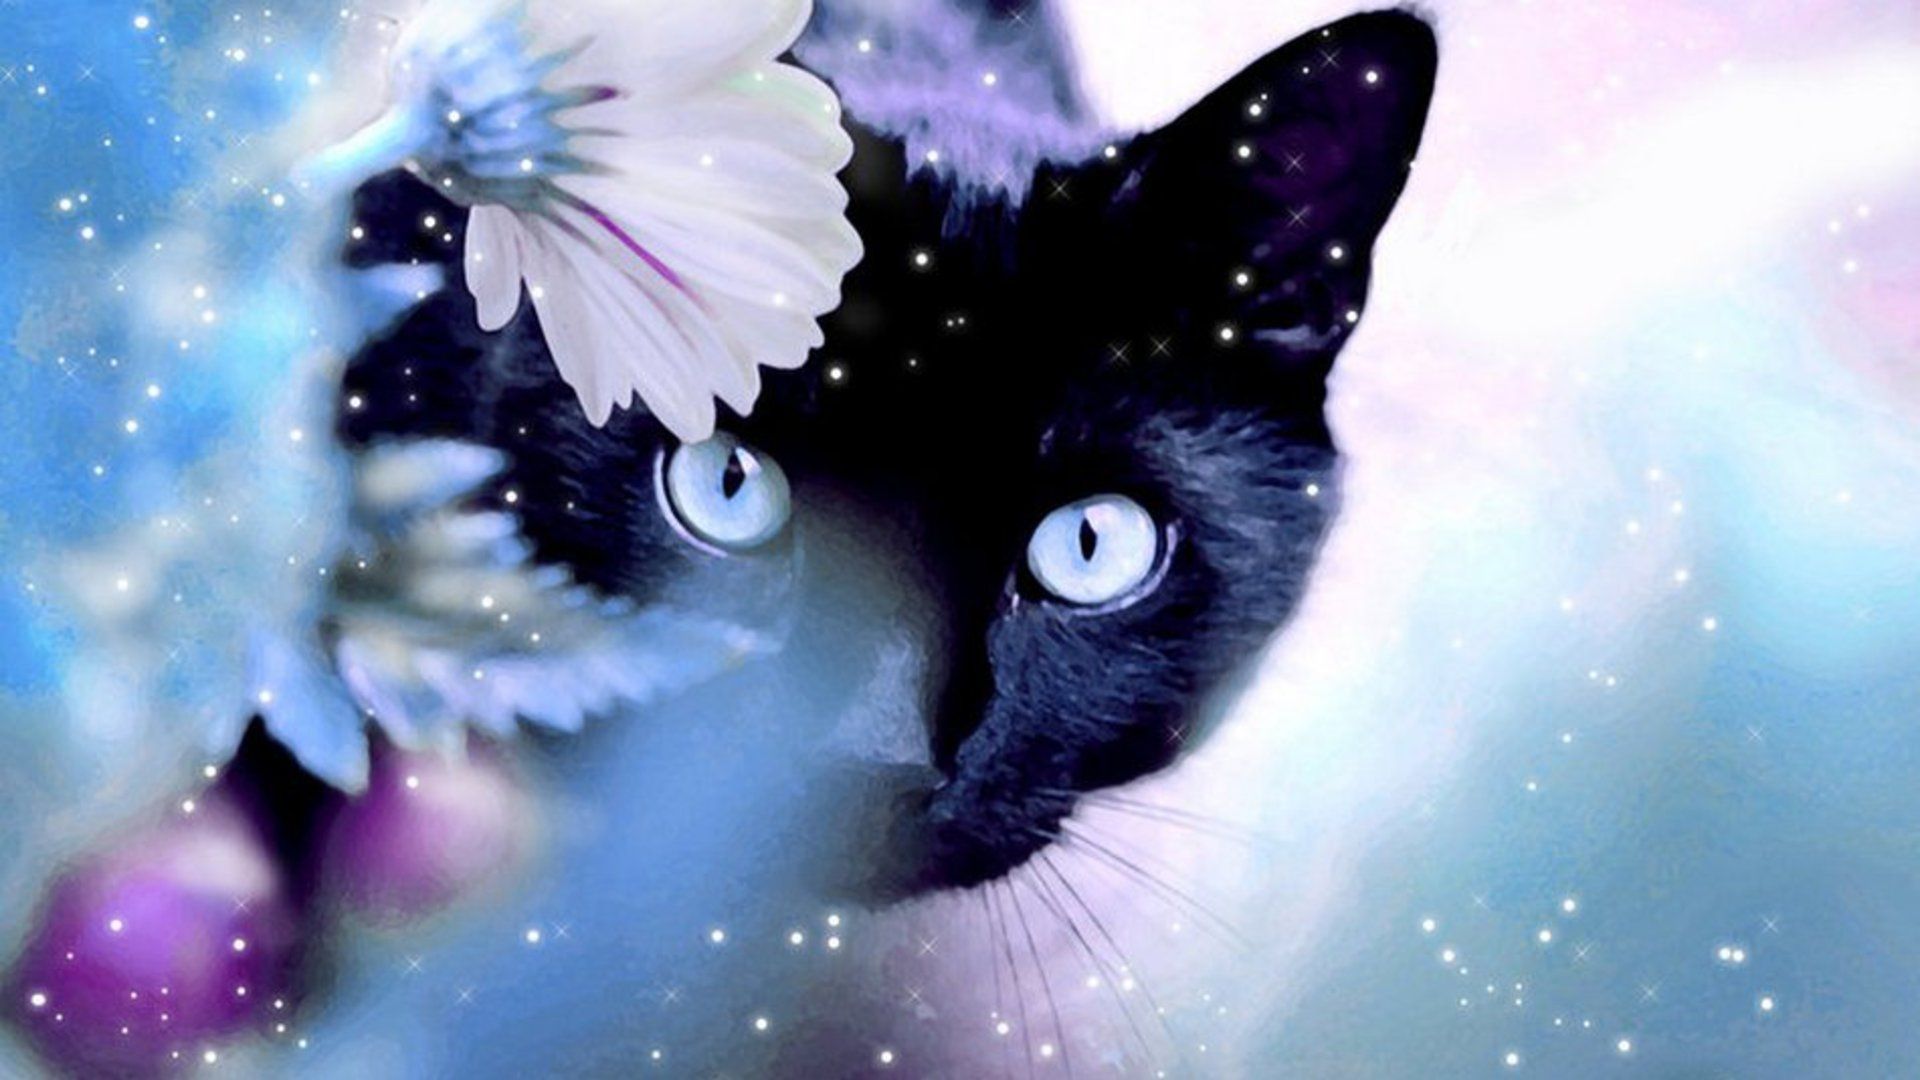 Mystical Winter wallpaper HD free. Cats, Cat wallpaper, Beautiful cats